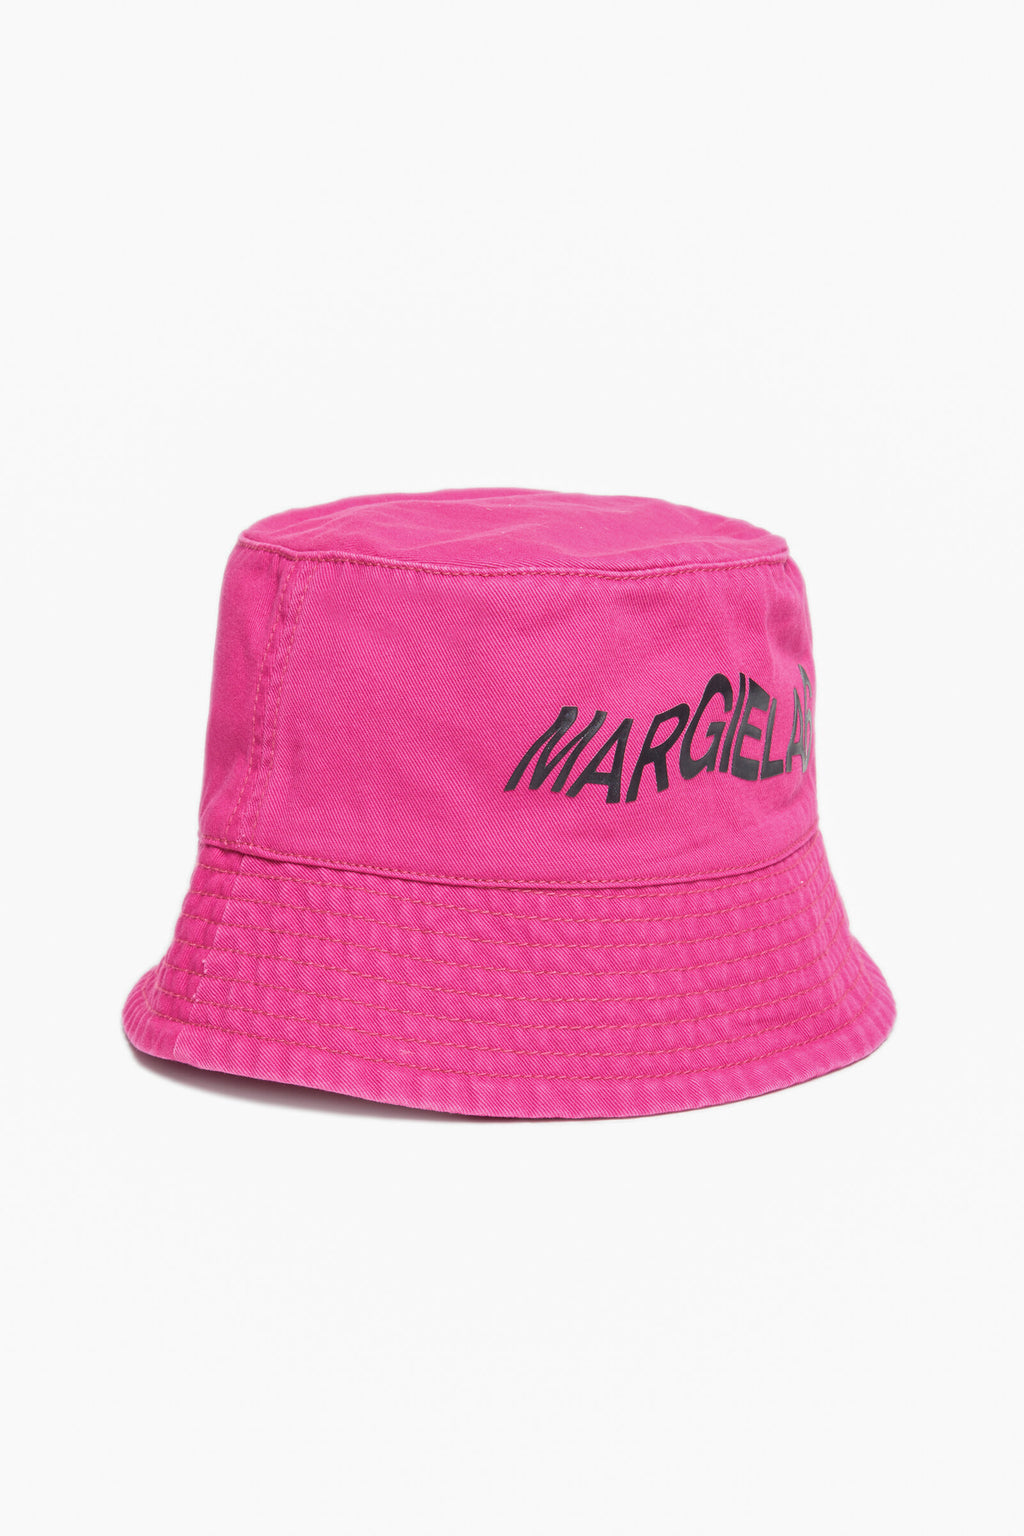 Pink gabardine fisherman's cap with logo